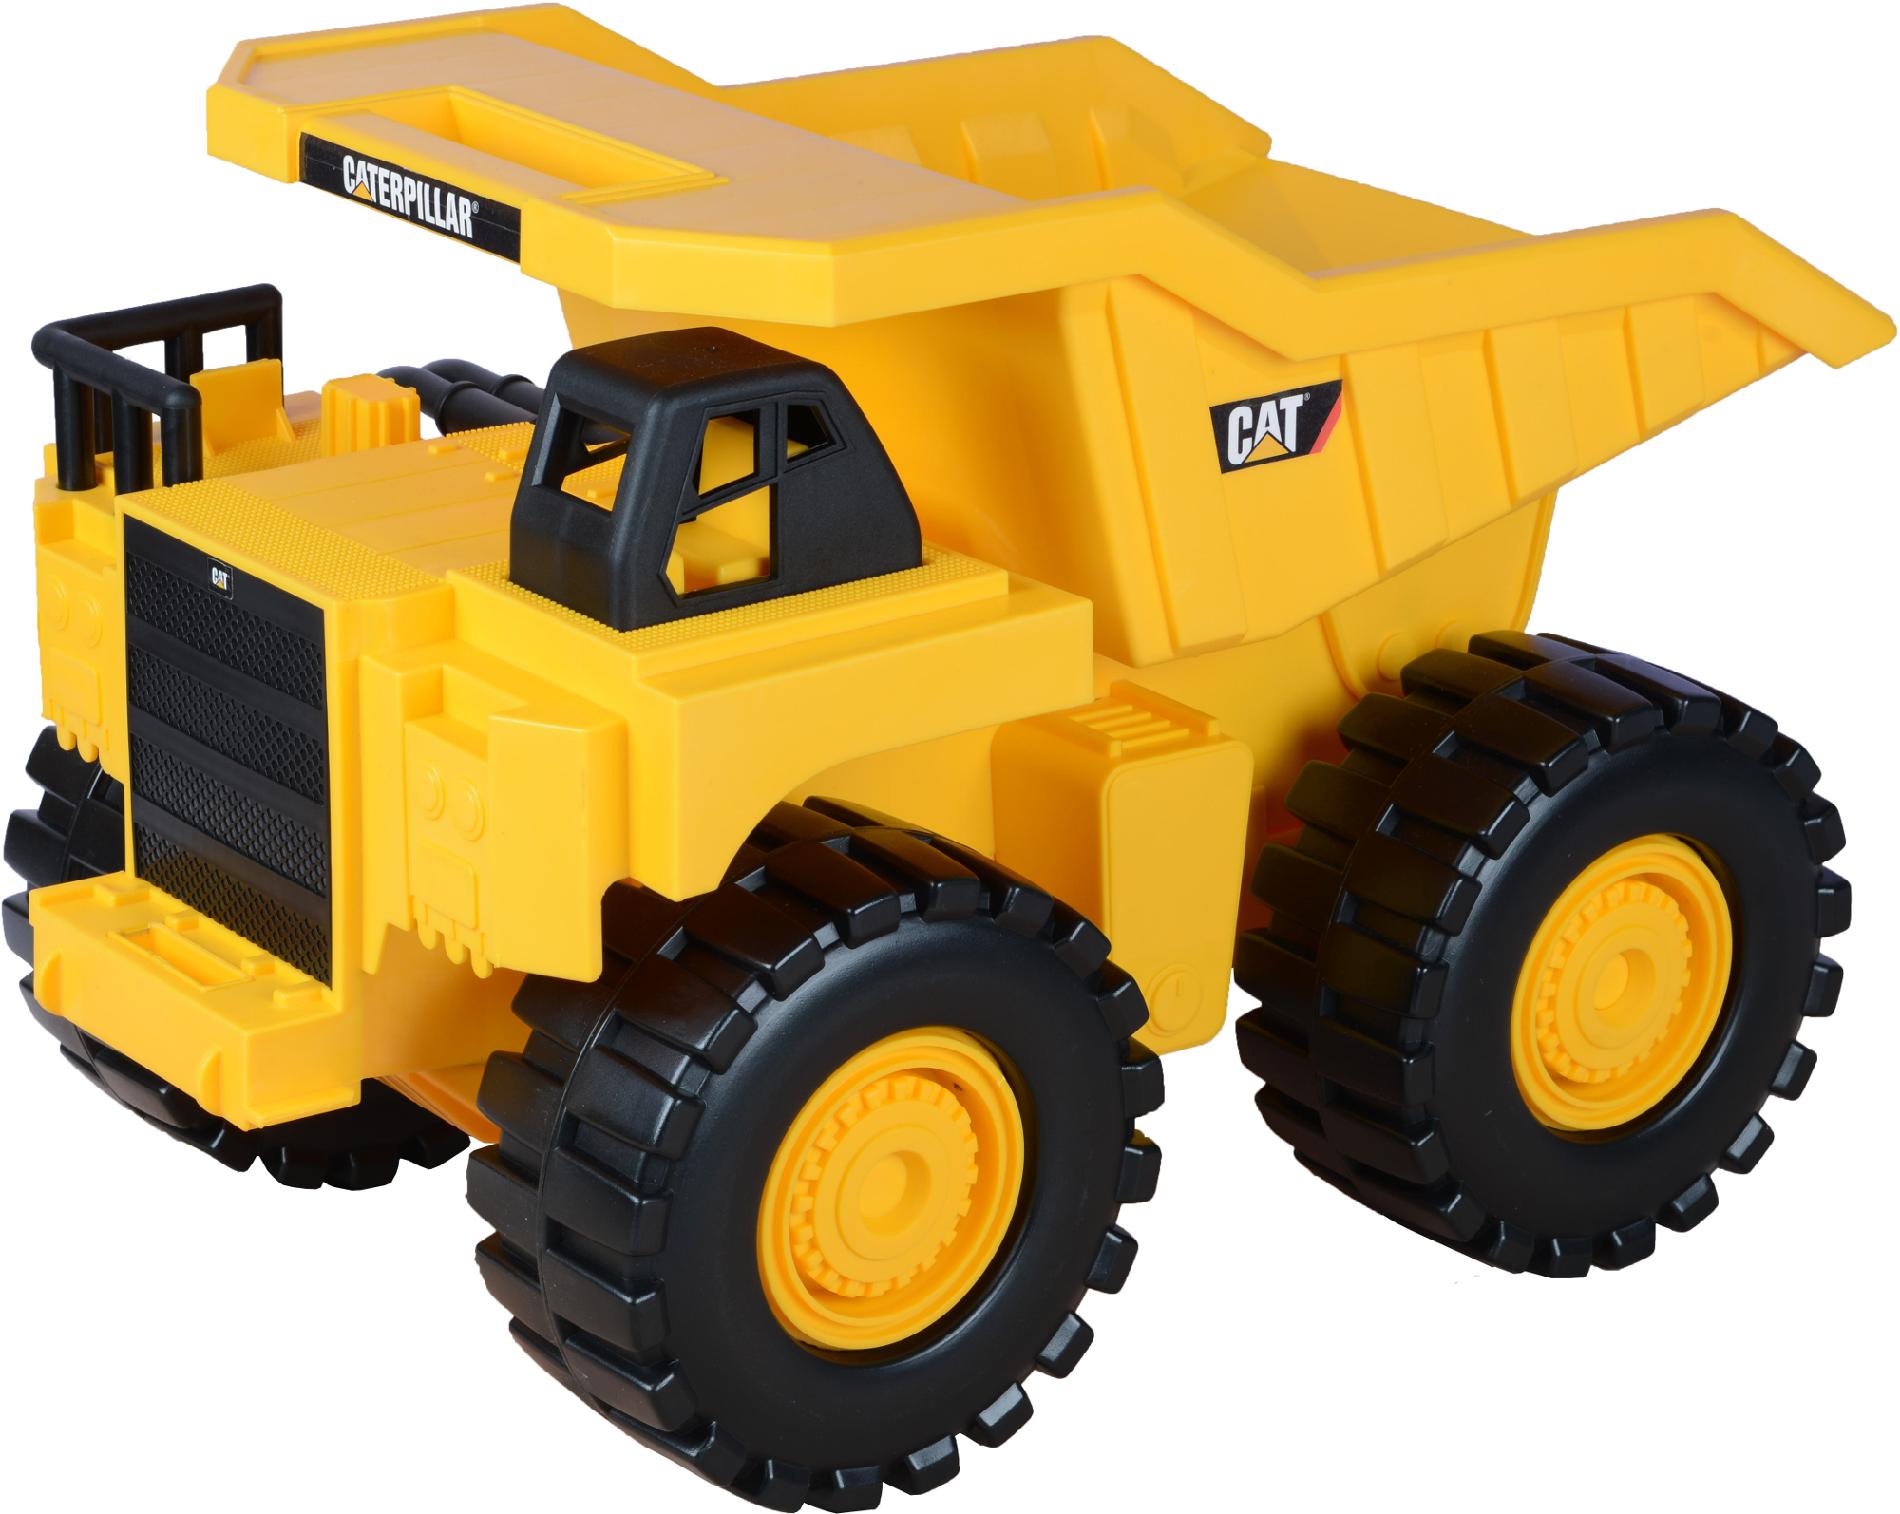 Cat Trucks Toys 23